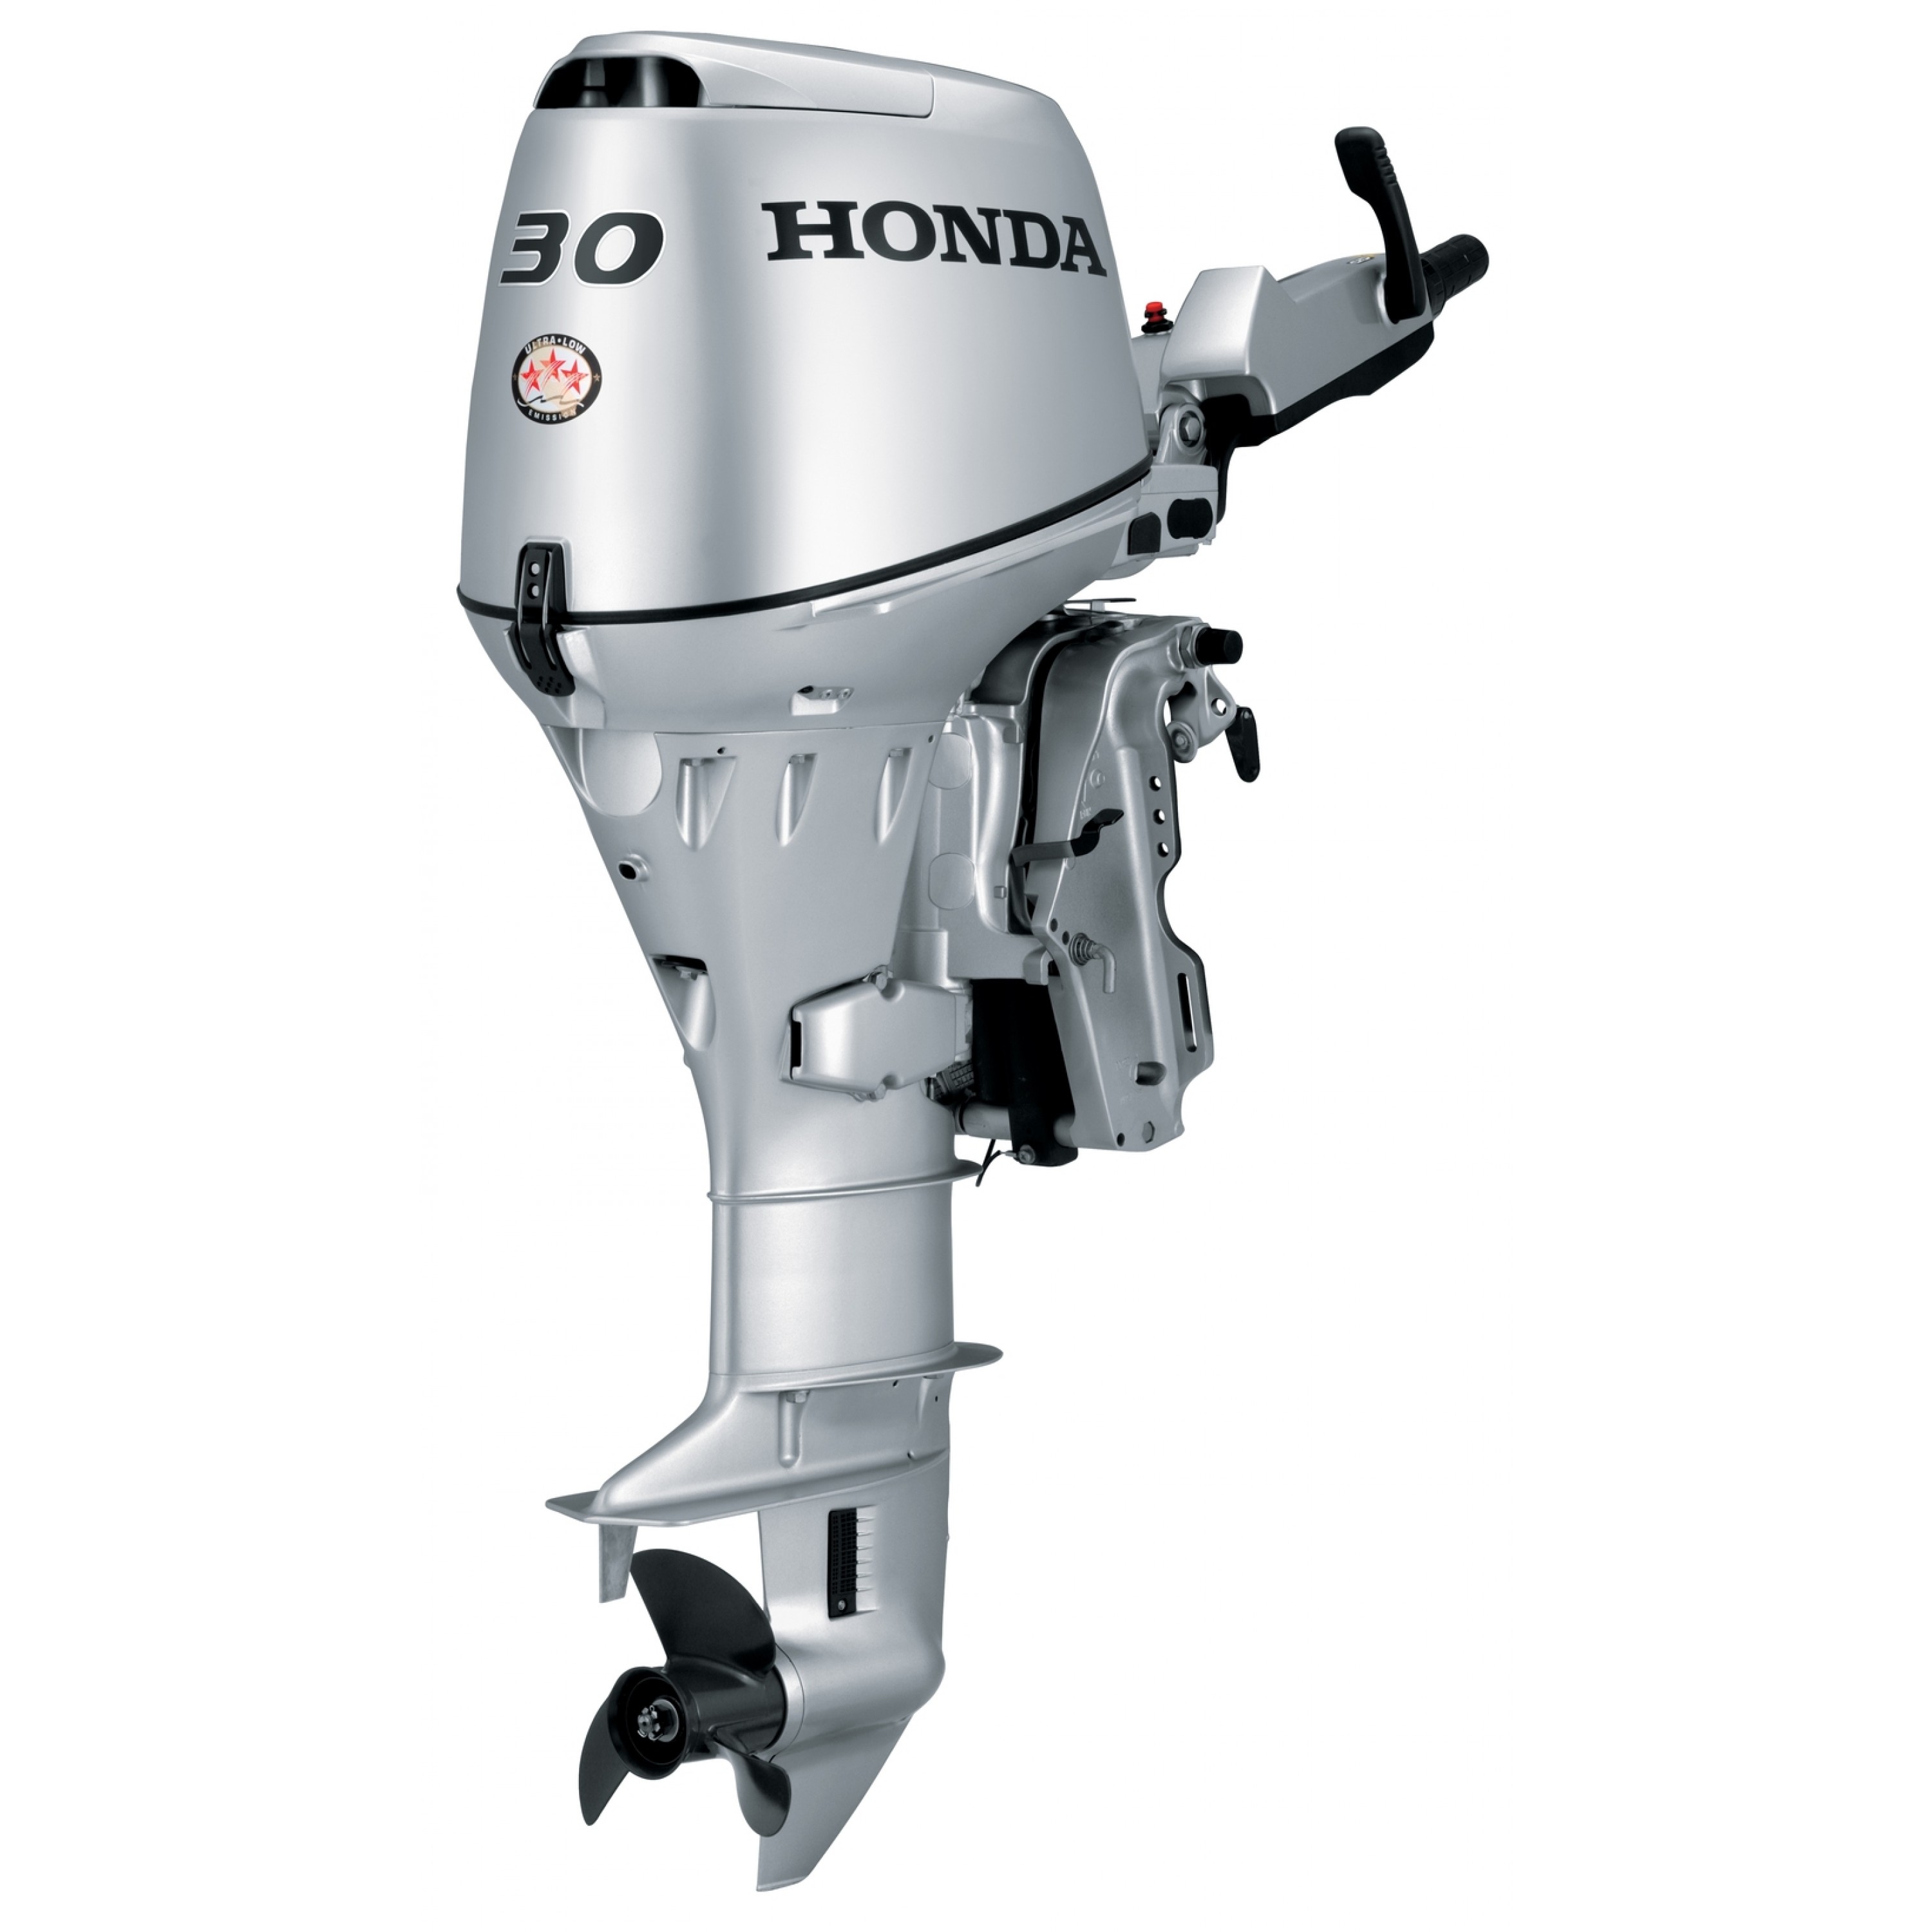 30 HP Honda Outboard Motor, BF30DK3SHGC